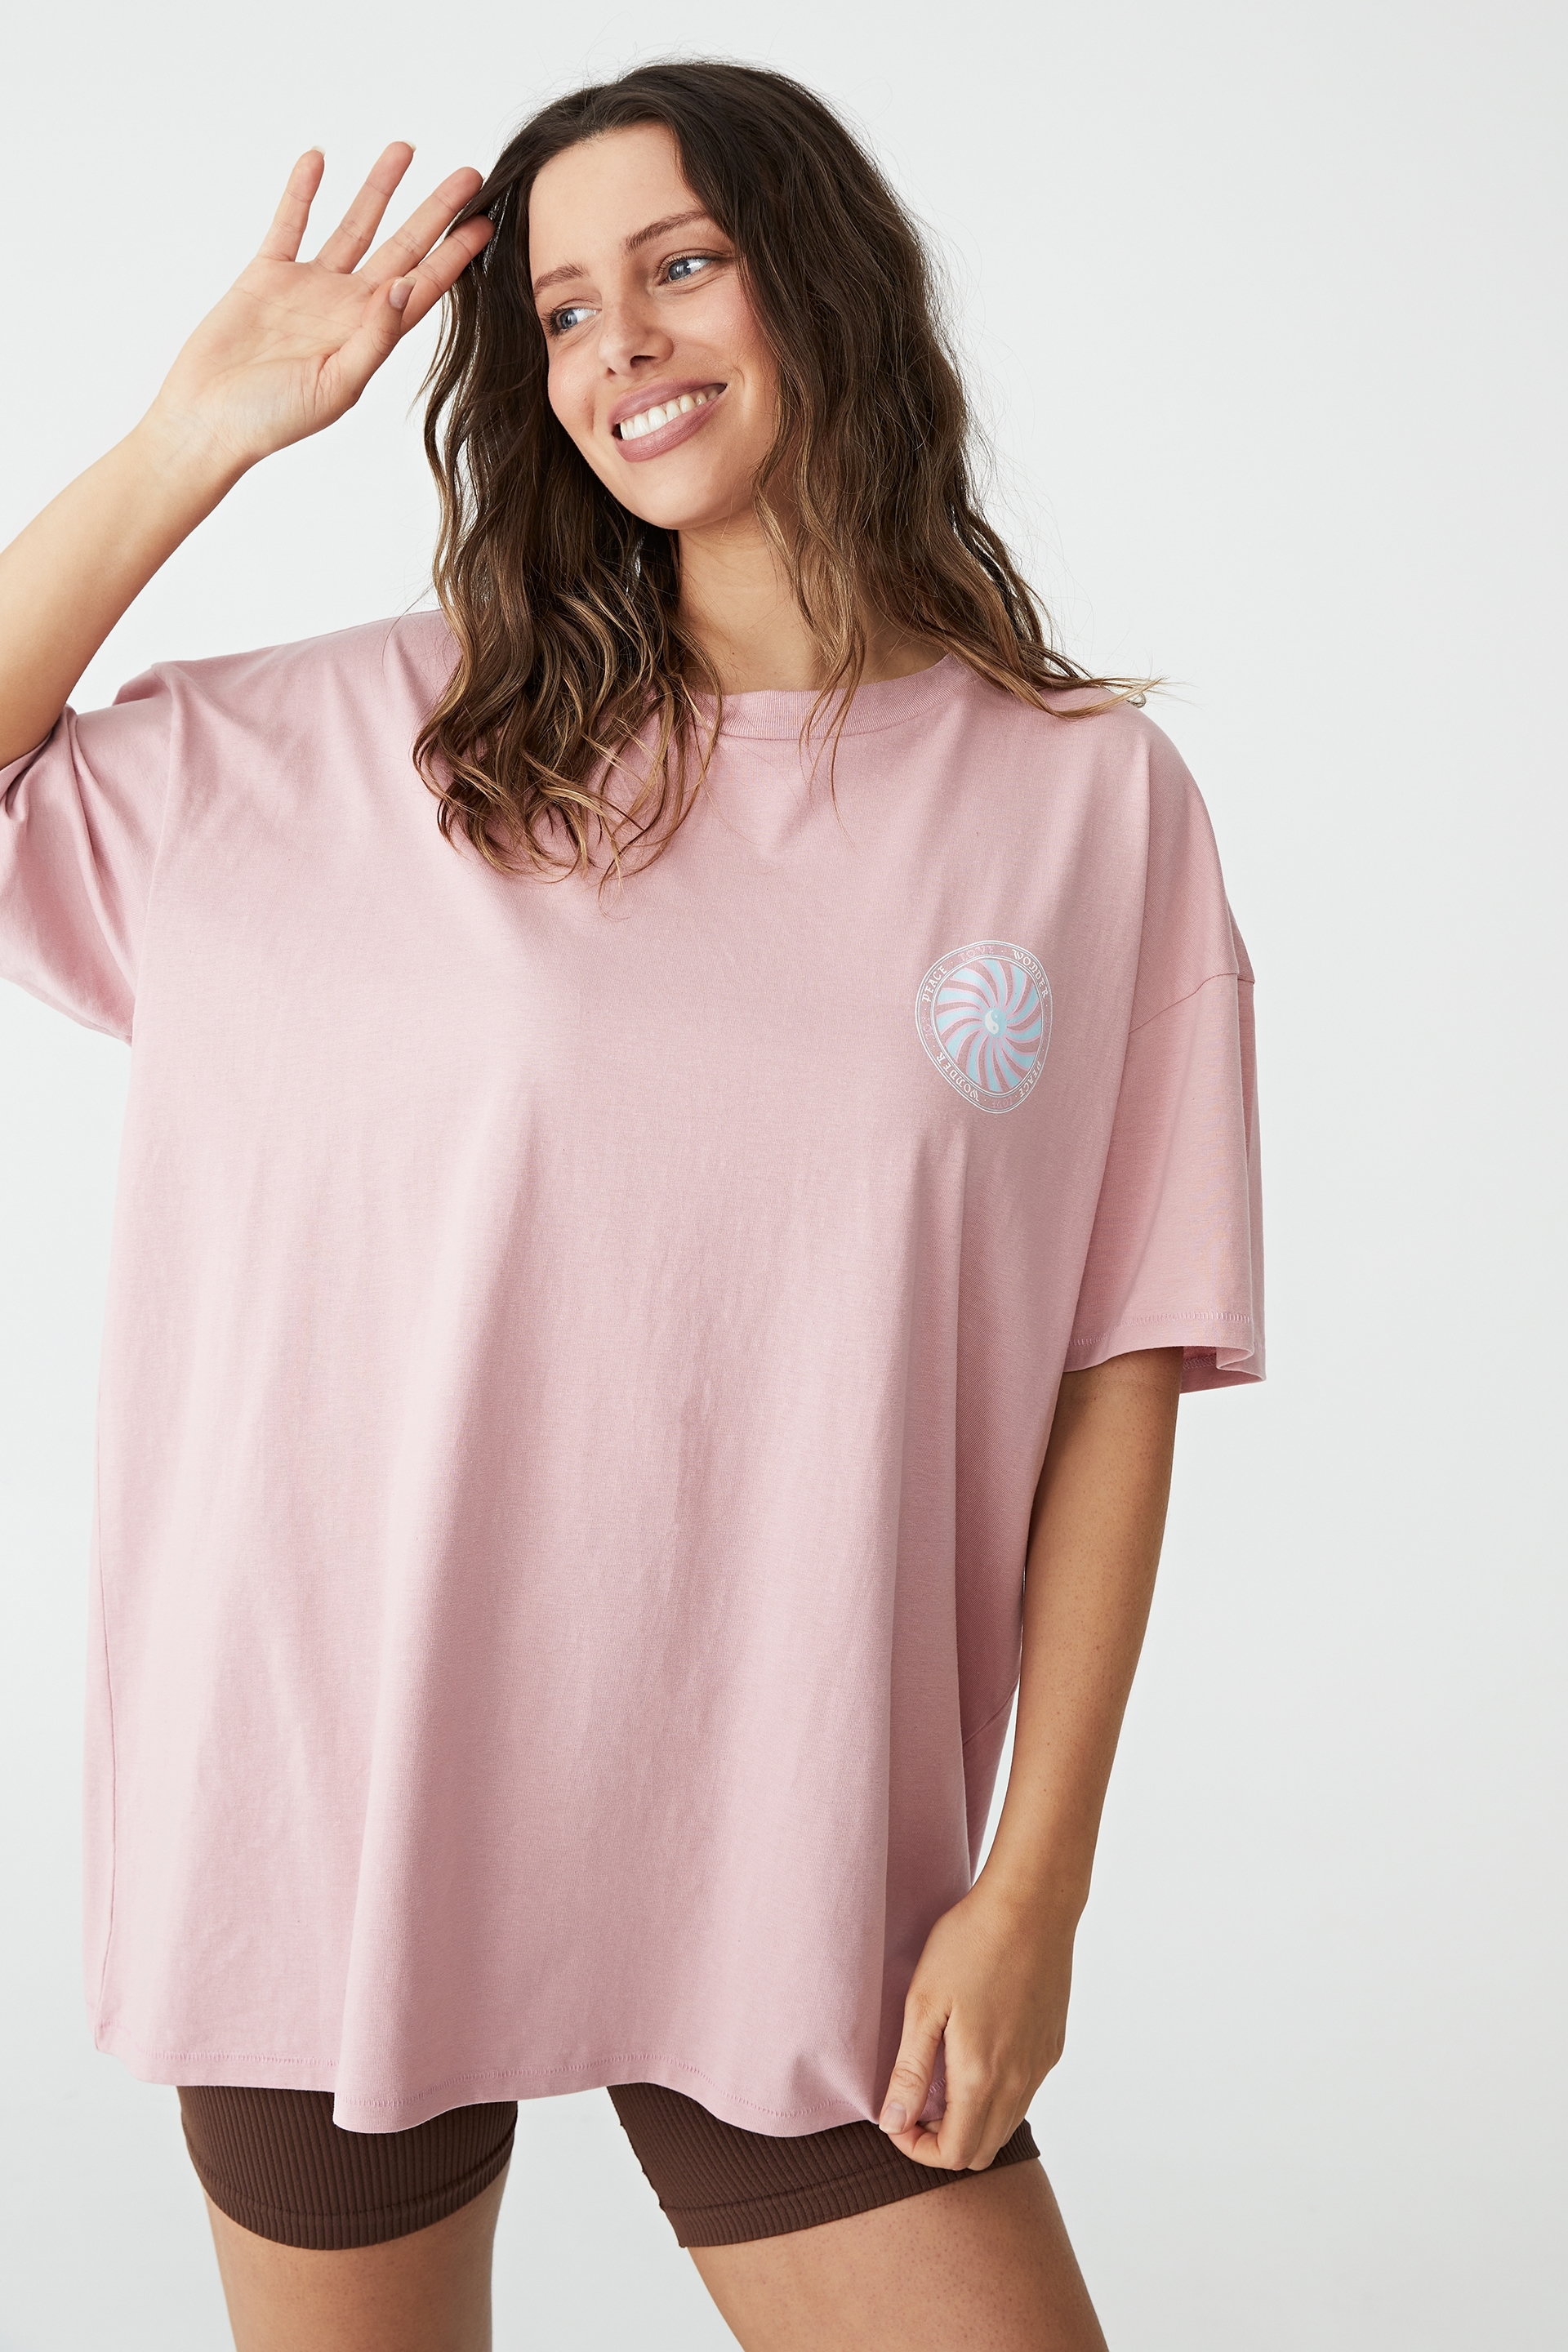 Cotton On Women - Oversized Graphic T Shirt Dress - Peace love wonder/soft candy